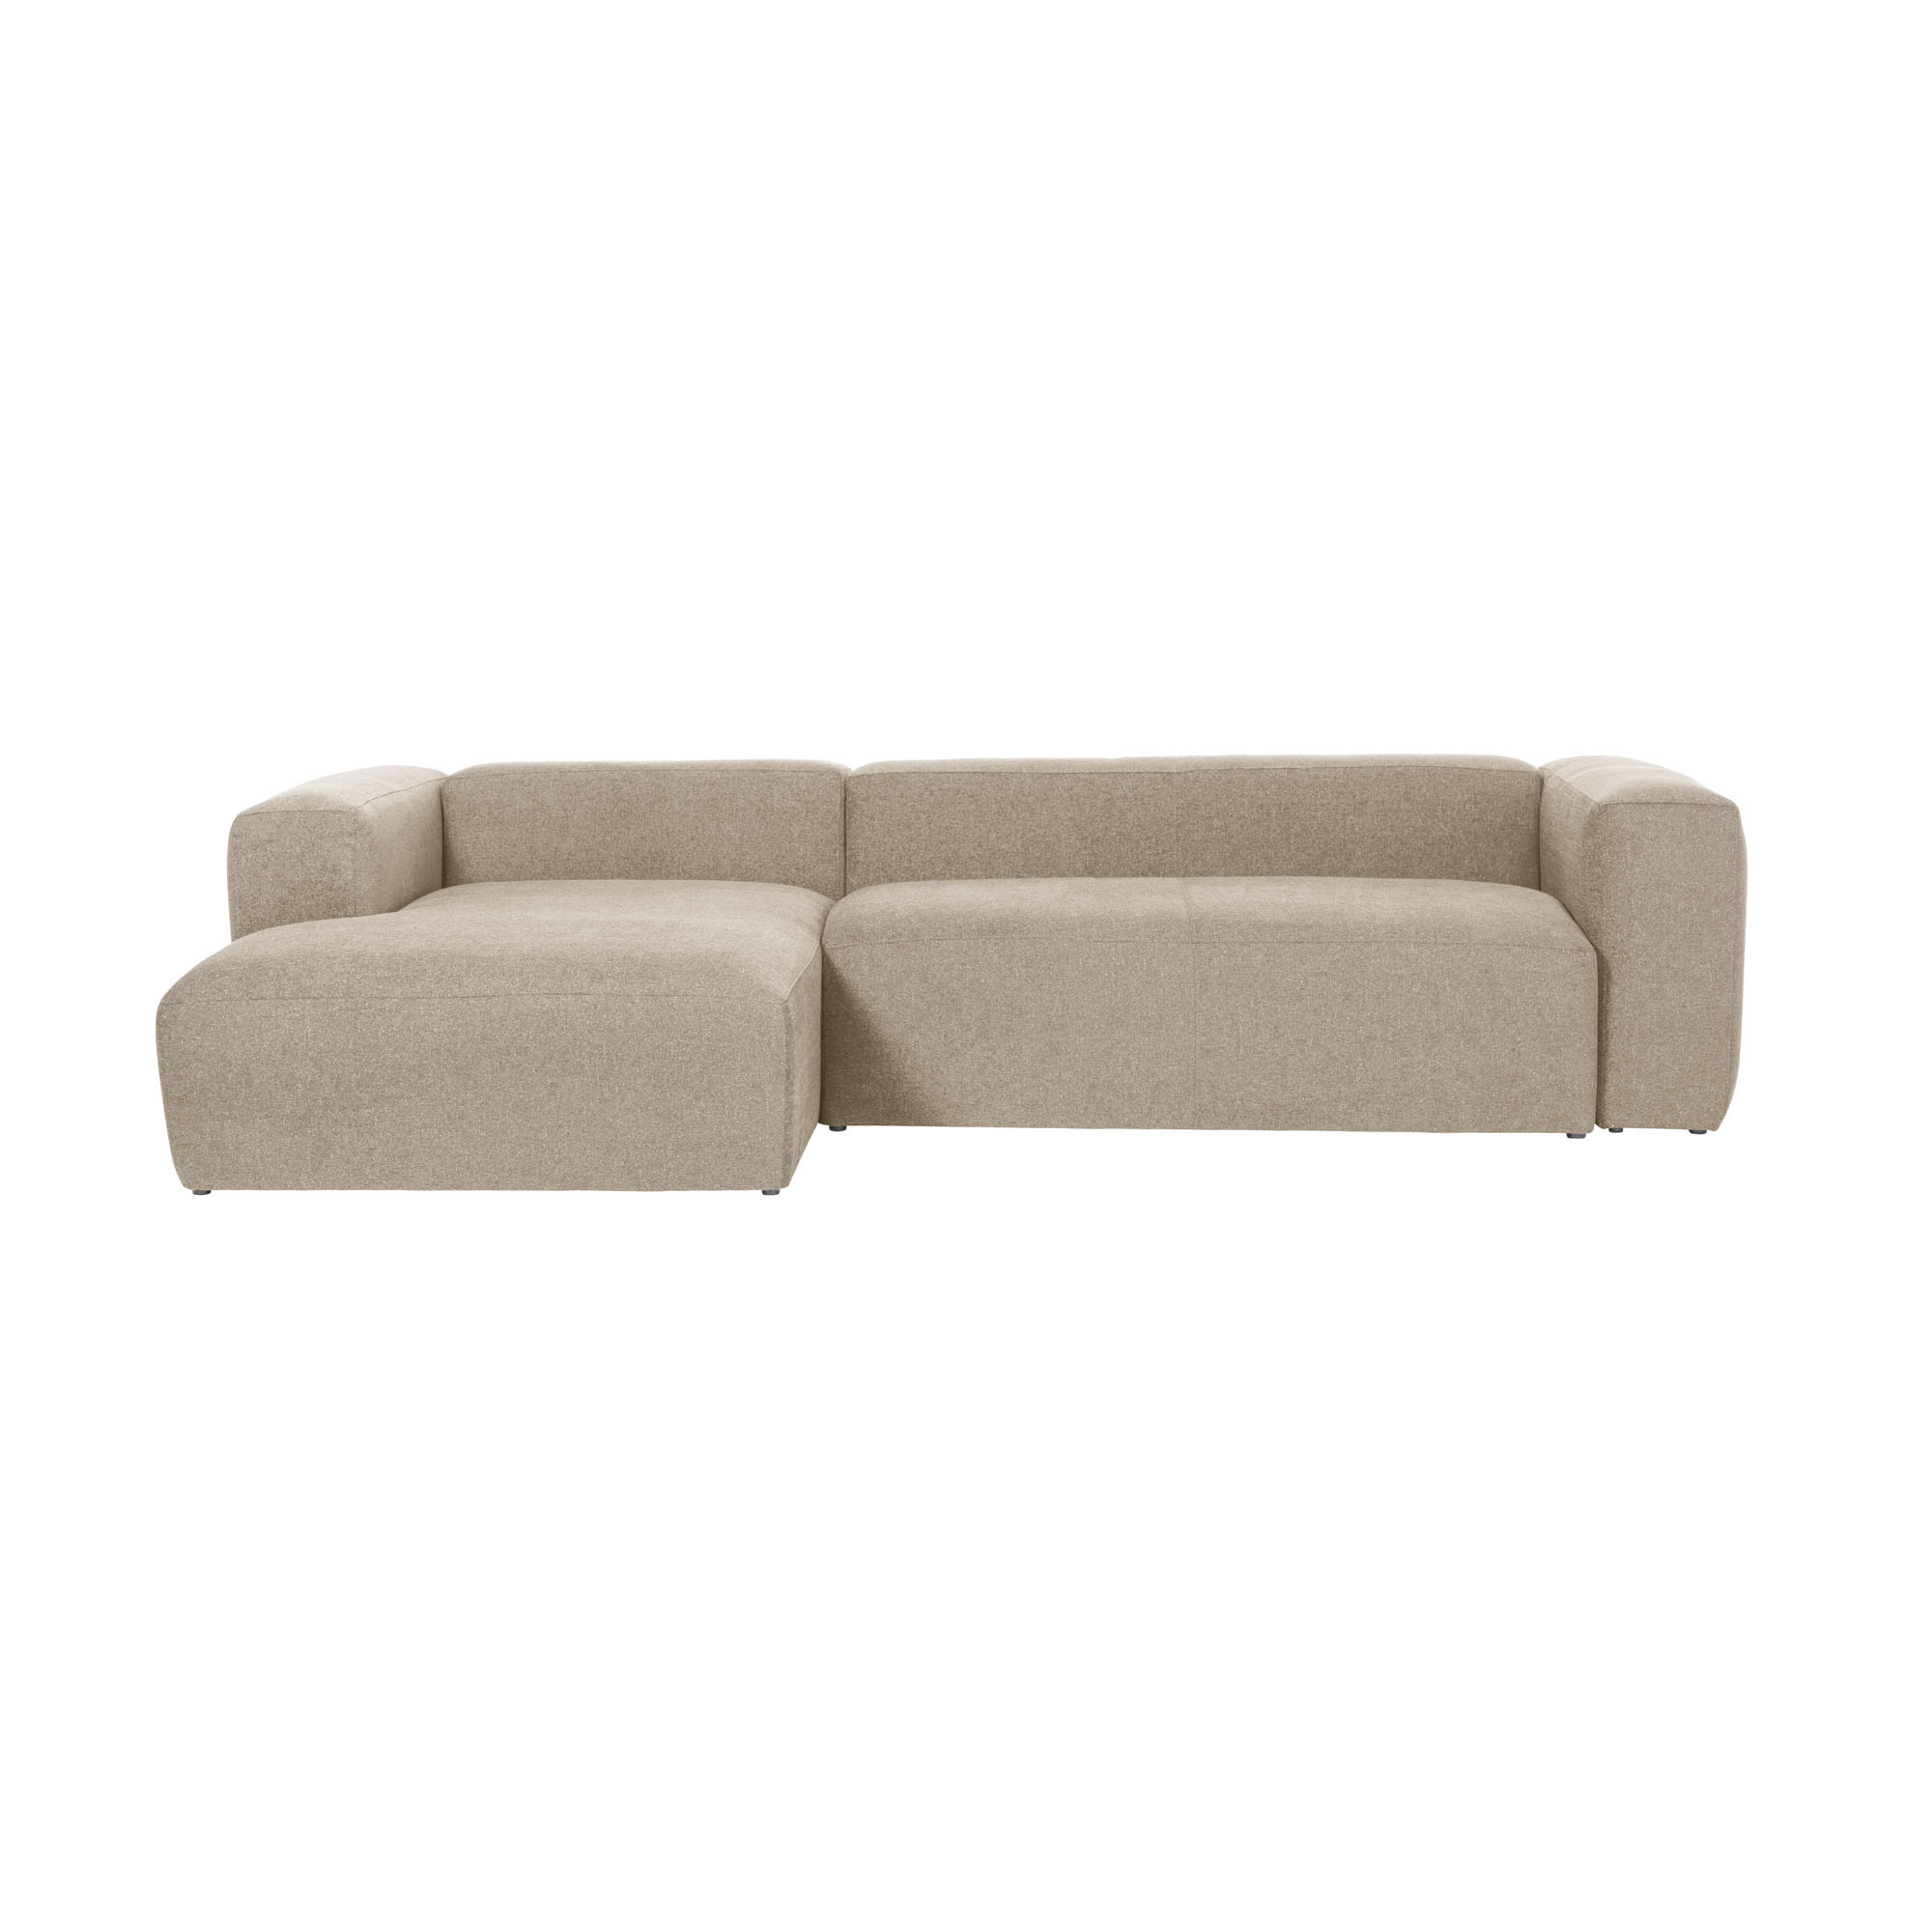 LAFORMA Blok 3 pers. sofa, m. venstre chaiselong - beige stof